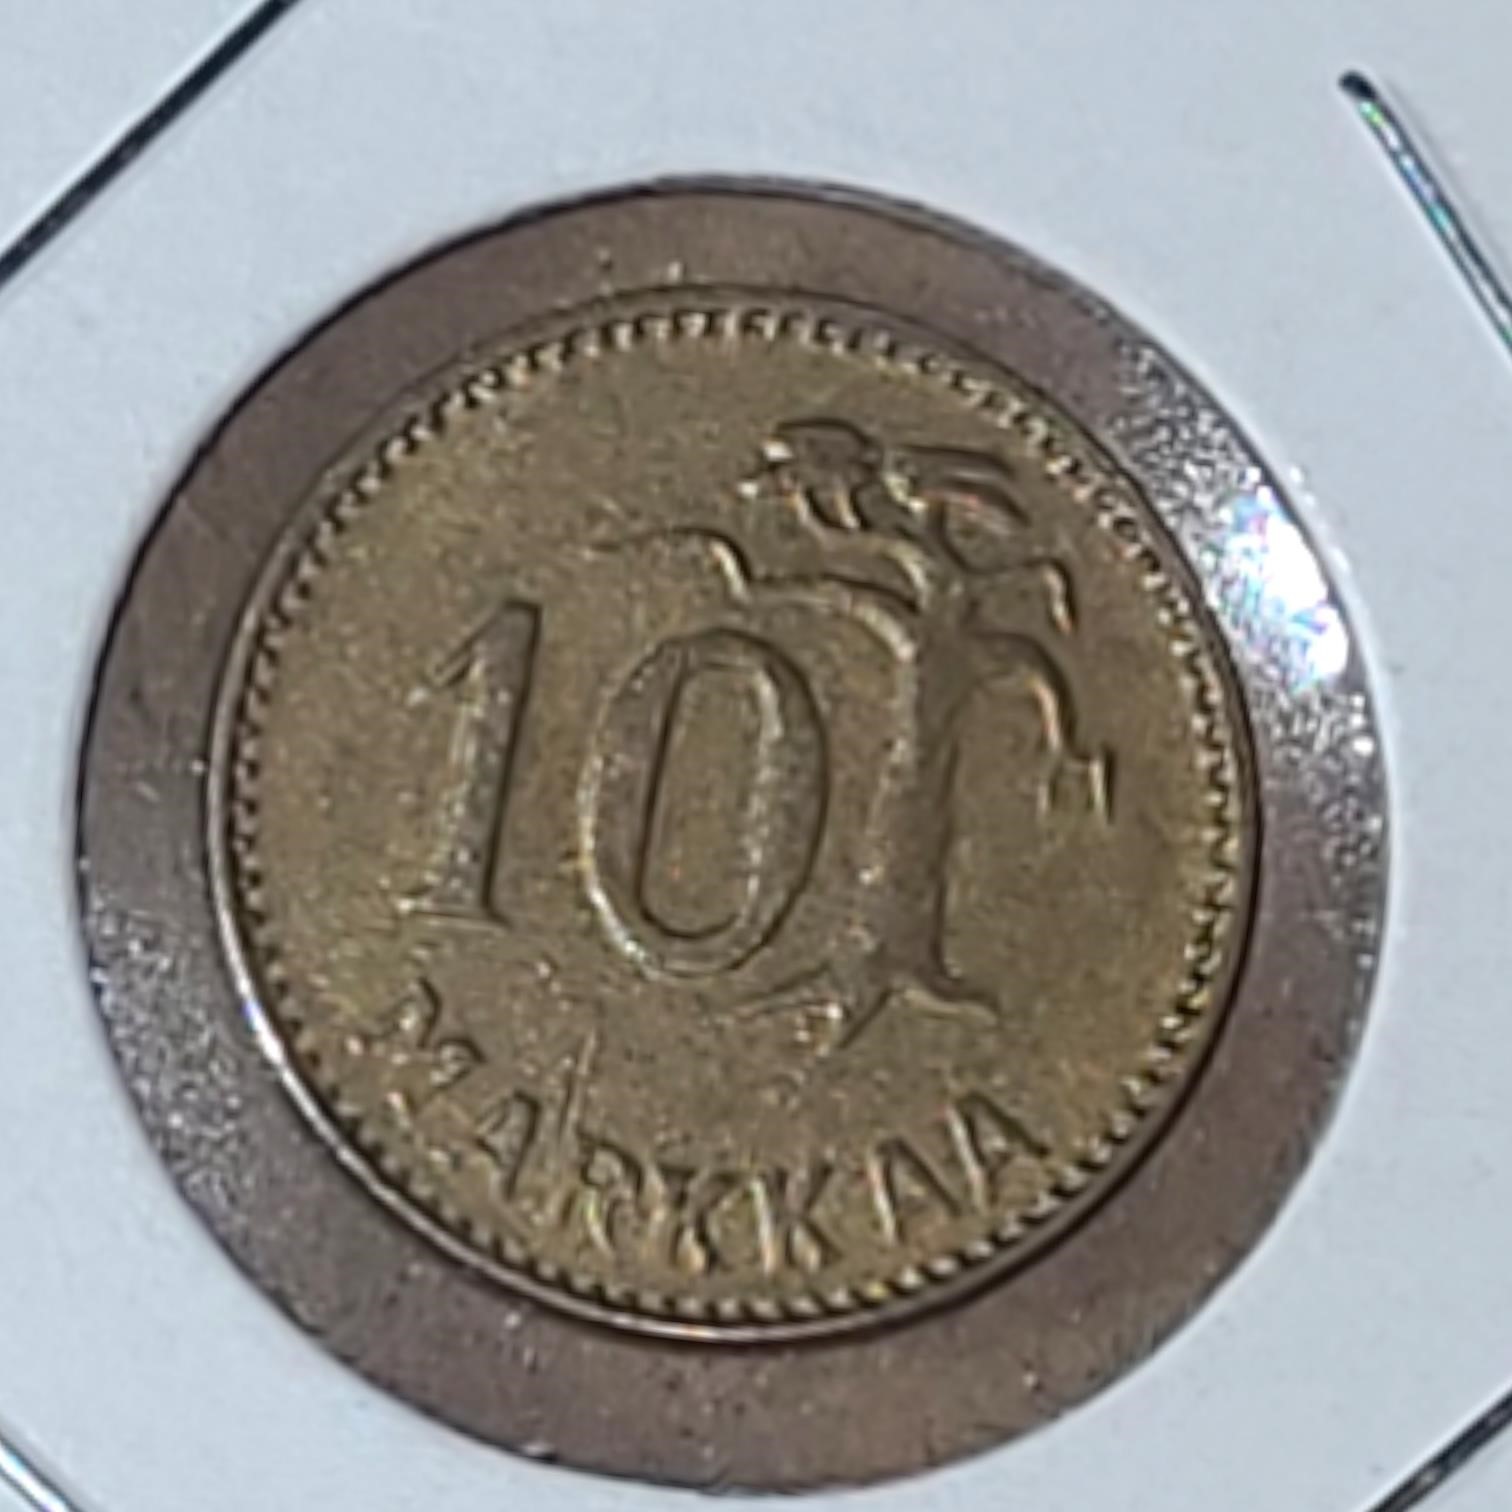 1953 Finland 10 Markkaa Coin